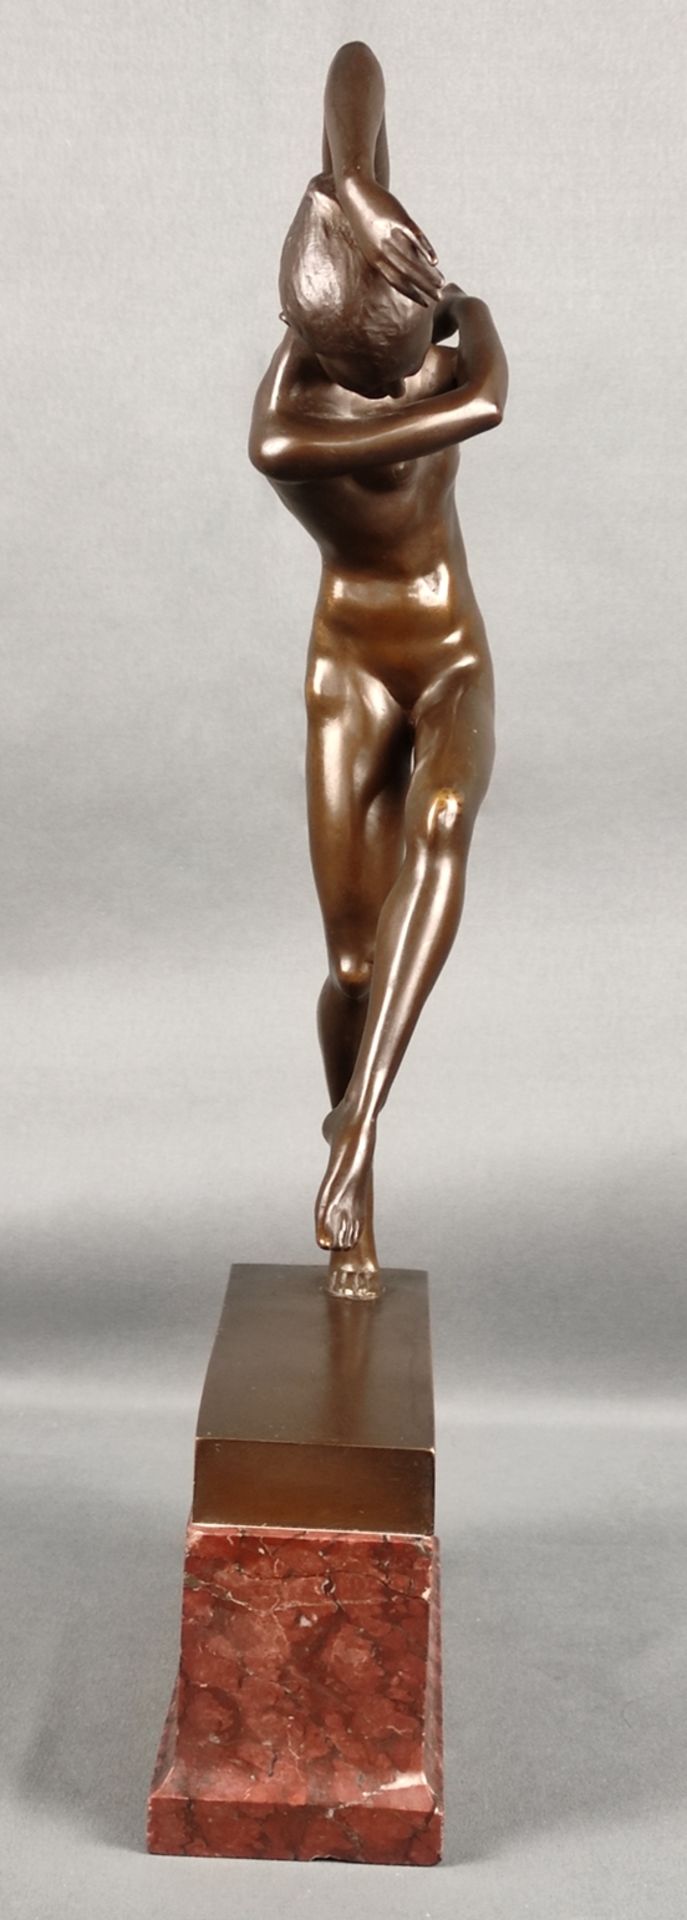 Jaray, Sandor (1870 Timisoara -1916 London) "Dancer", dynamic figure study on plinth, bronze, brown - Image 4 of 5